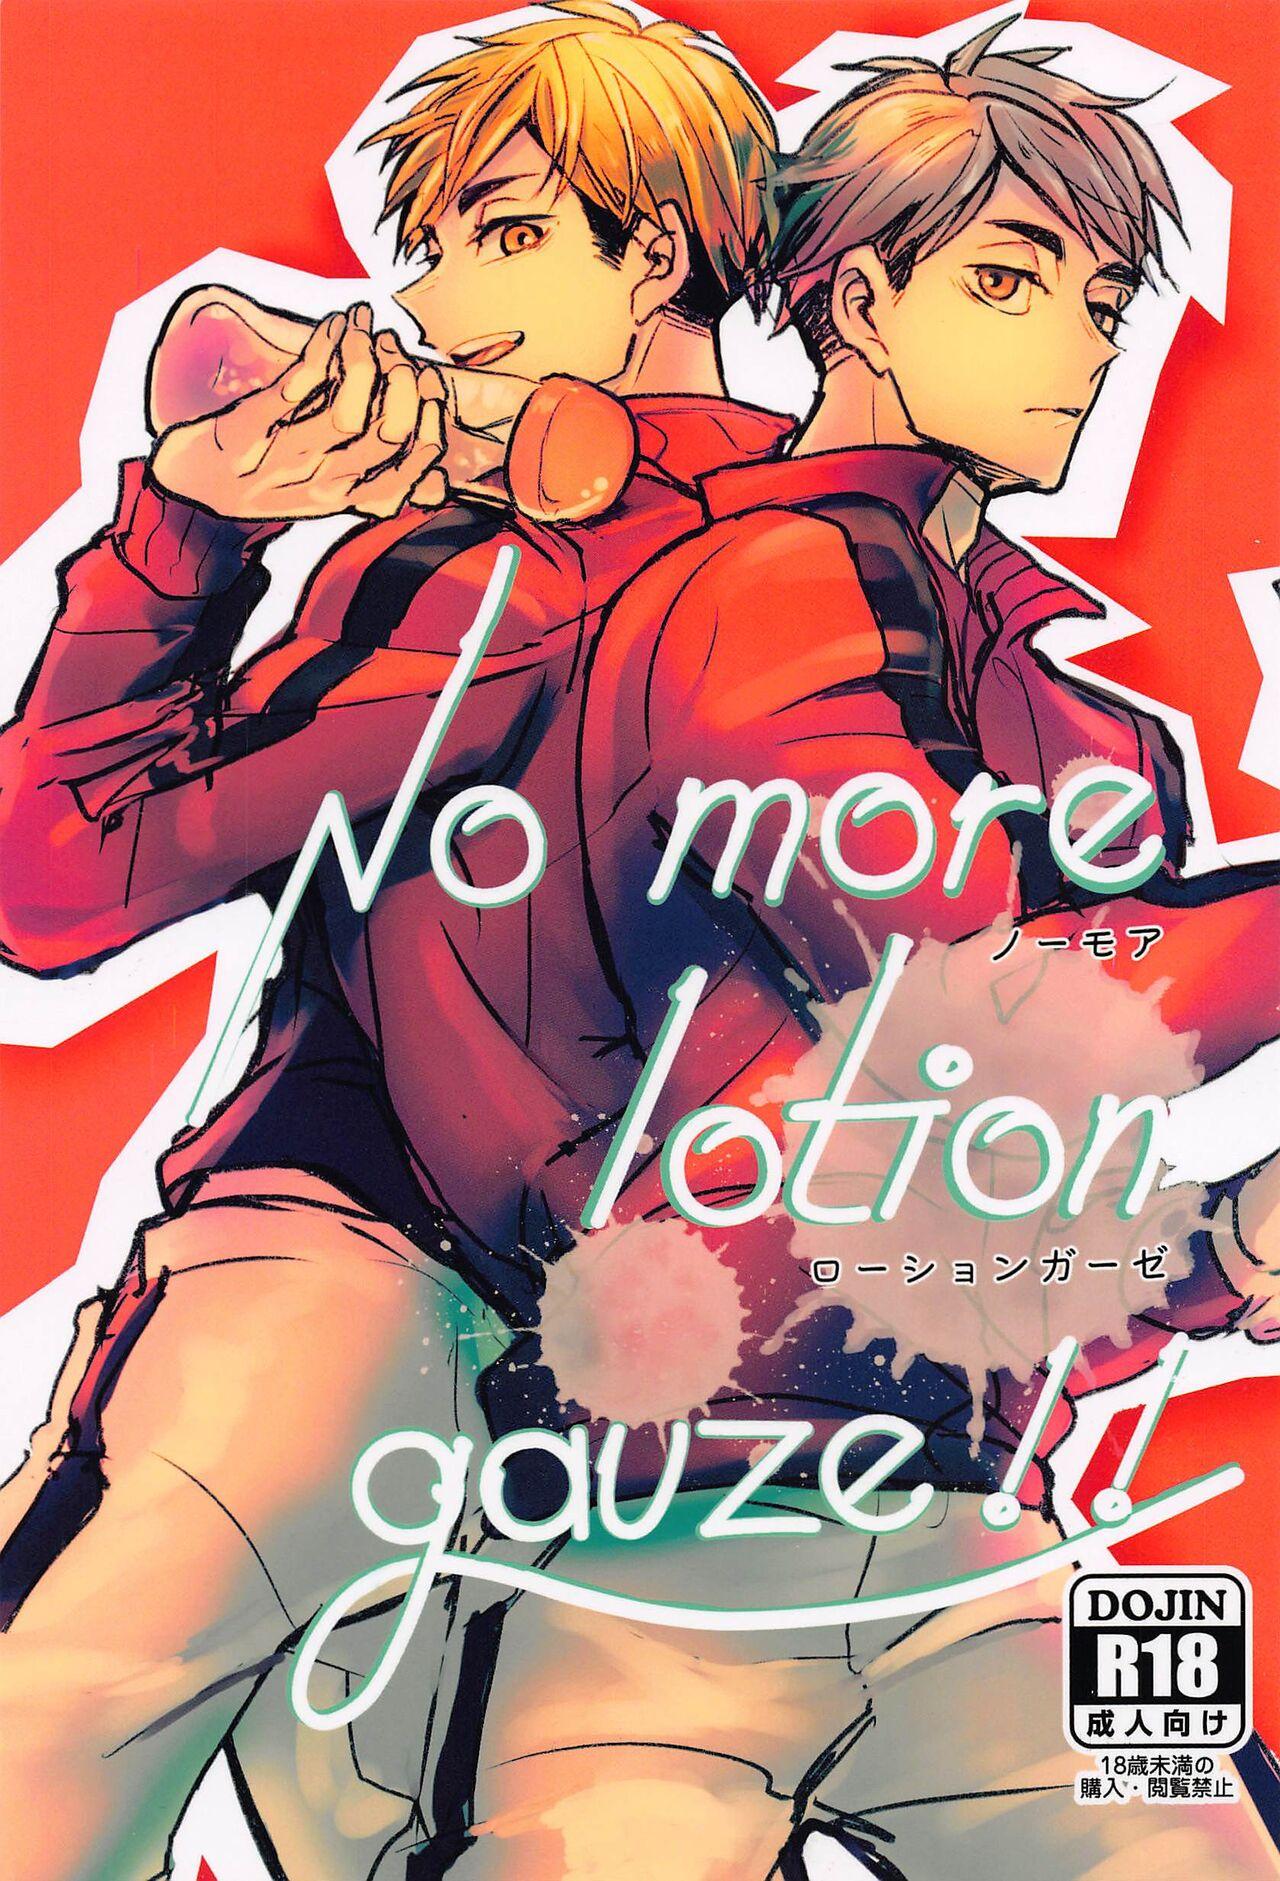 nomoaroshongaze No more lotion gauze！！ 0